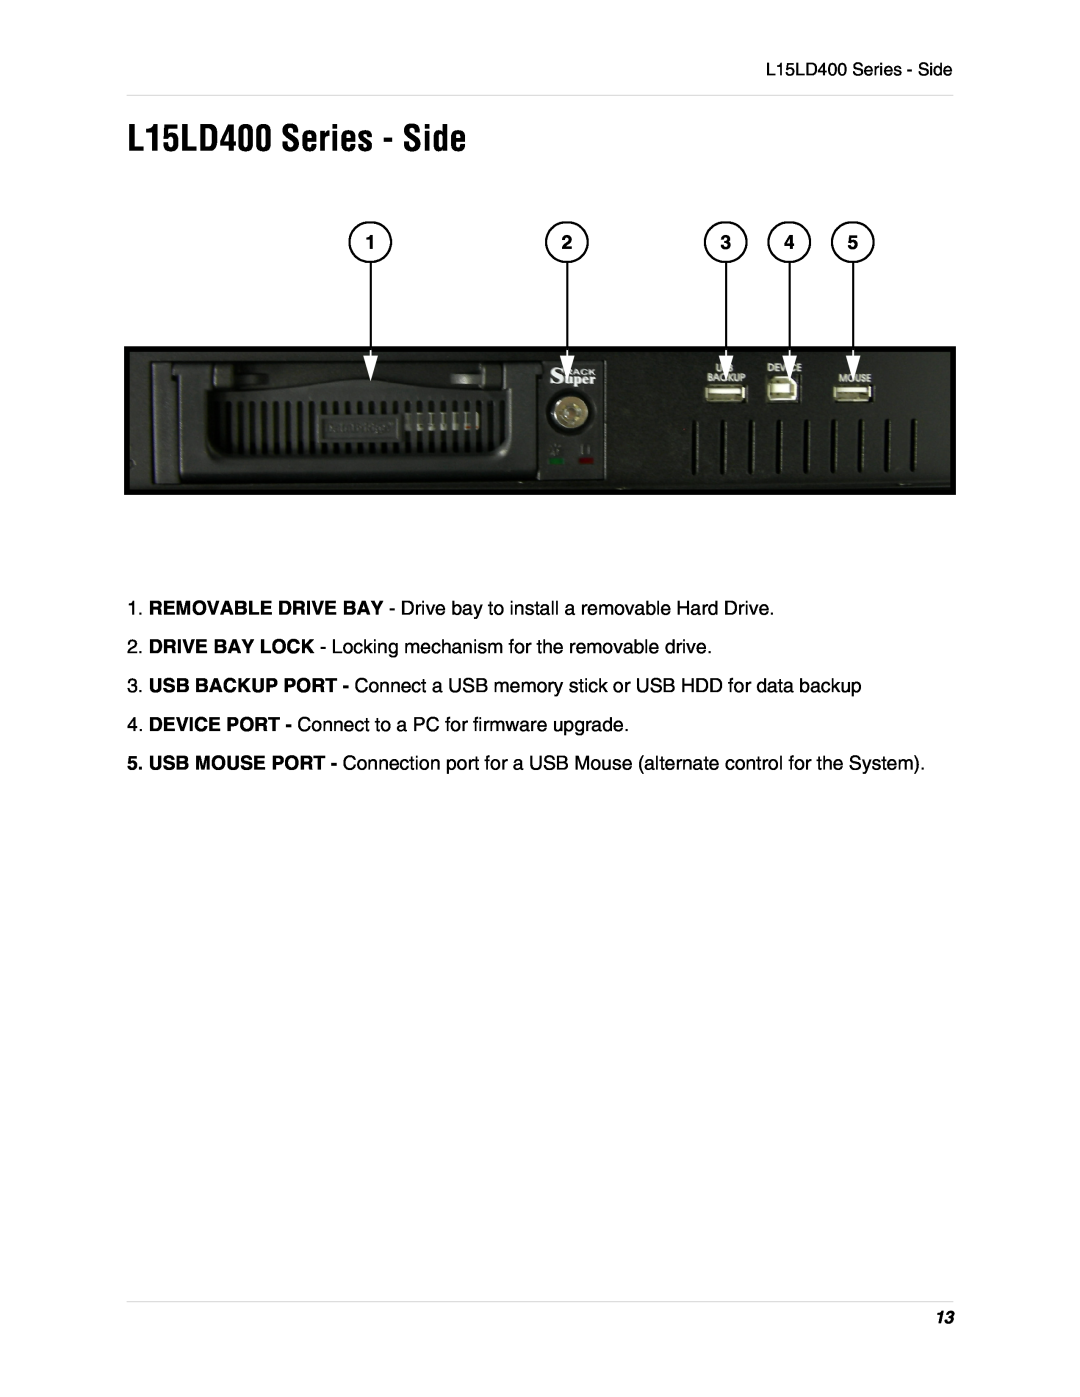 LOREX Technology L15D400 instruction manual L15LD400 Series - Side 